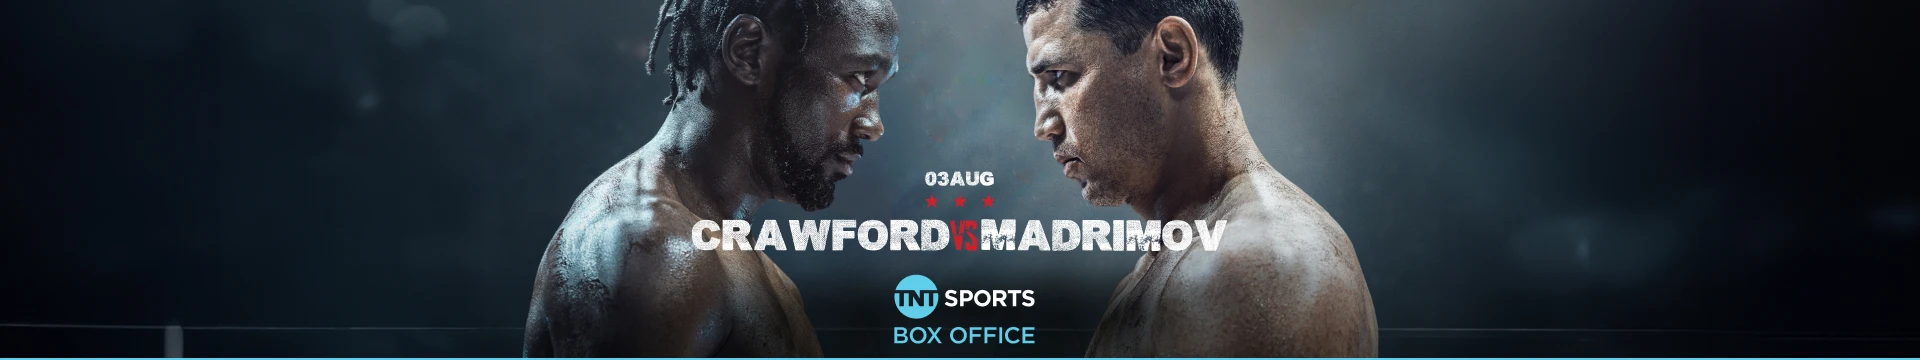 3 August - Crawford vs Madrimov - TNT Sports Box Office